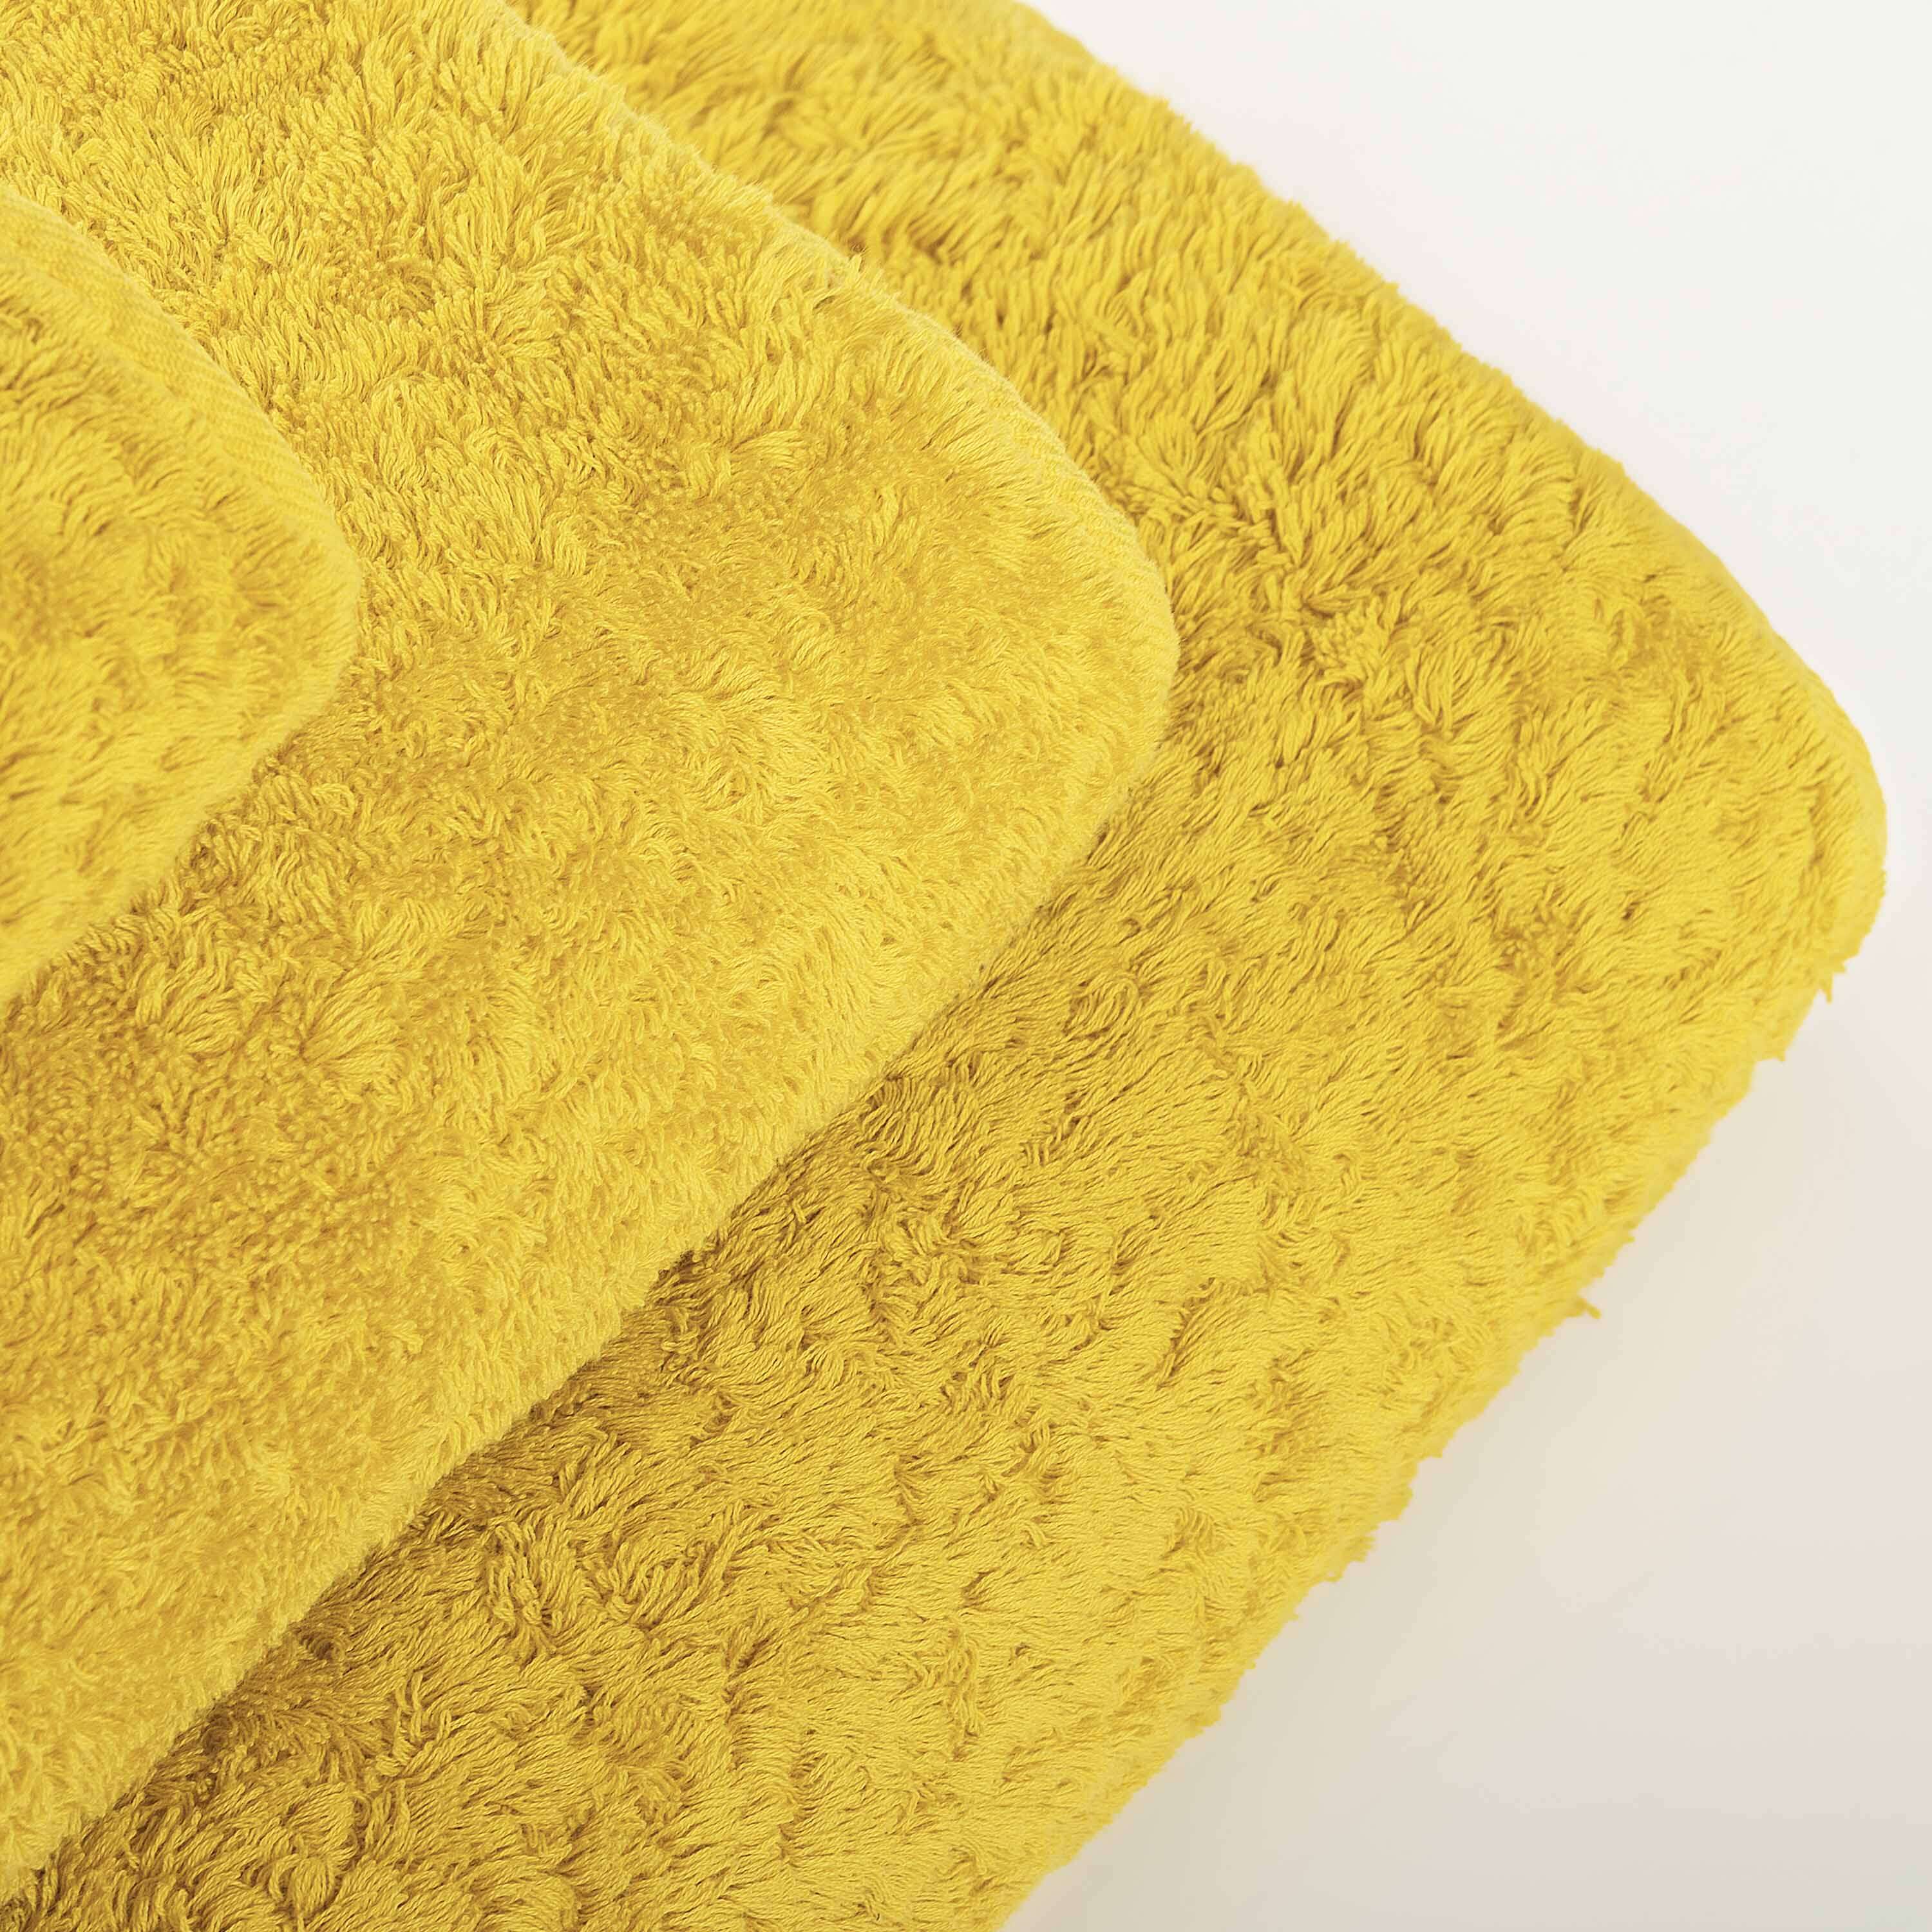 Элитное полотенце Egoist Range Mustard ☞ Размер: 50 x 100 см